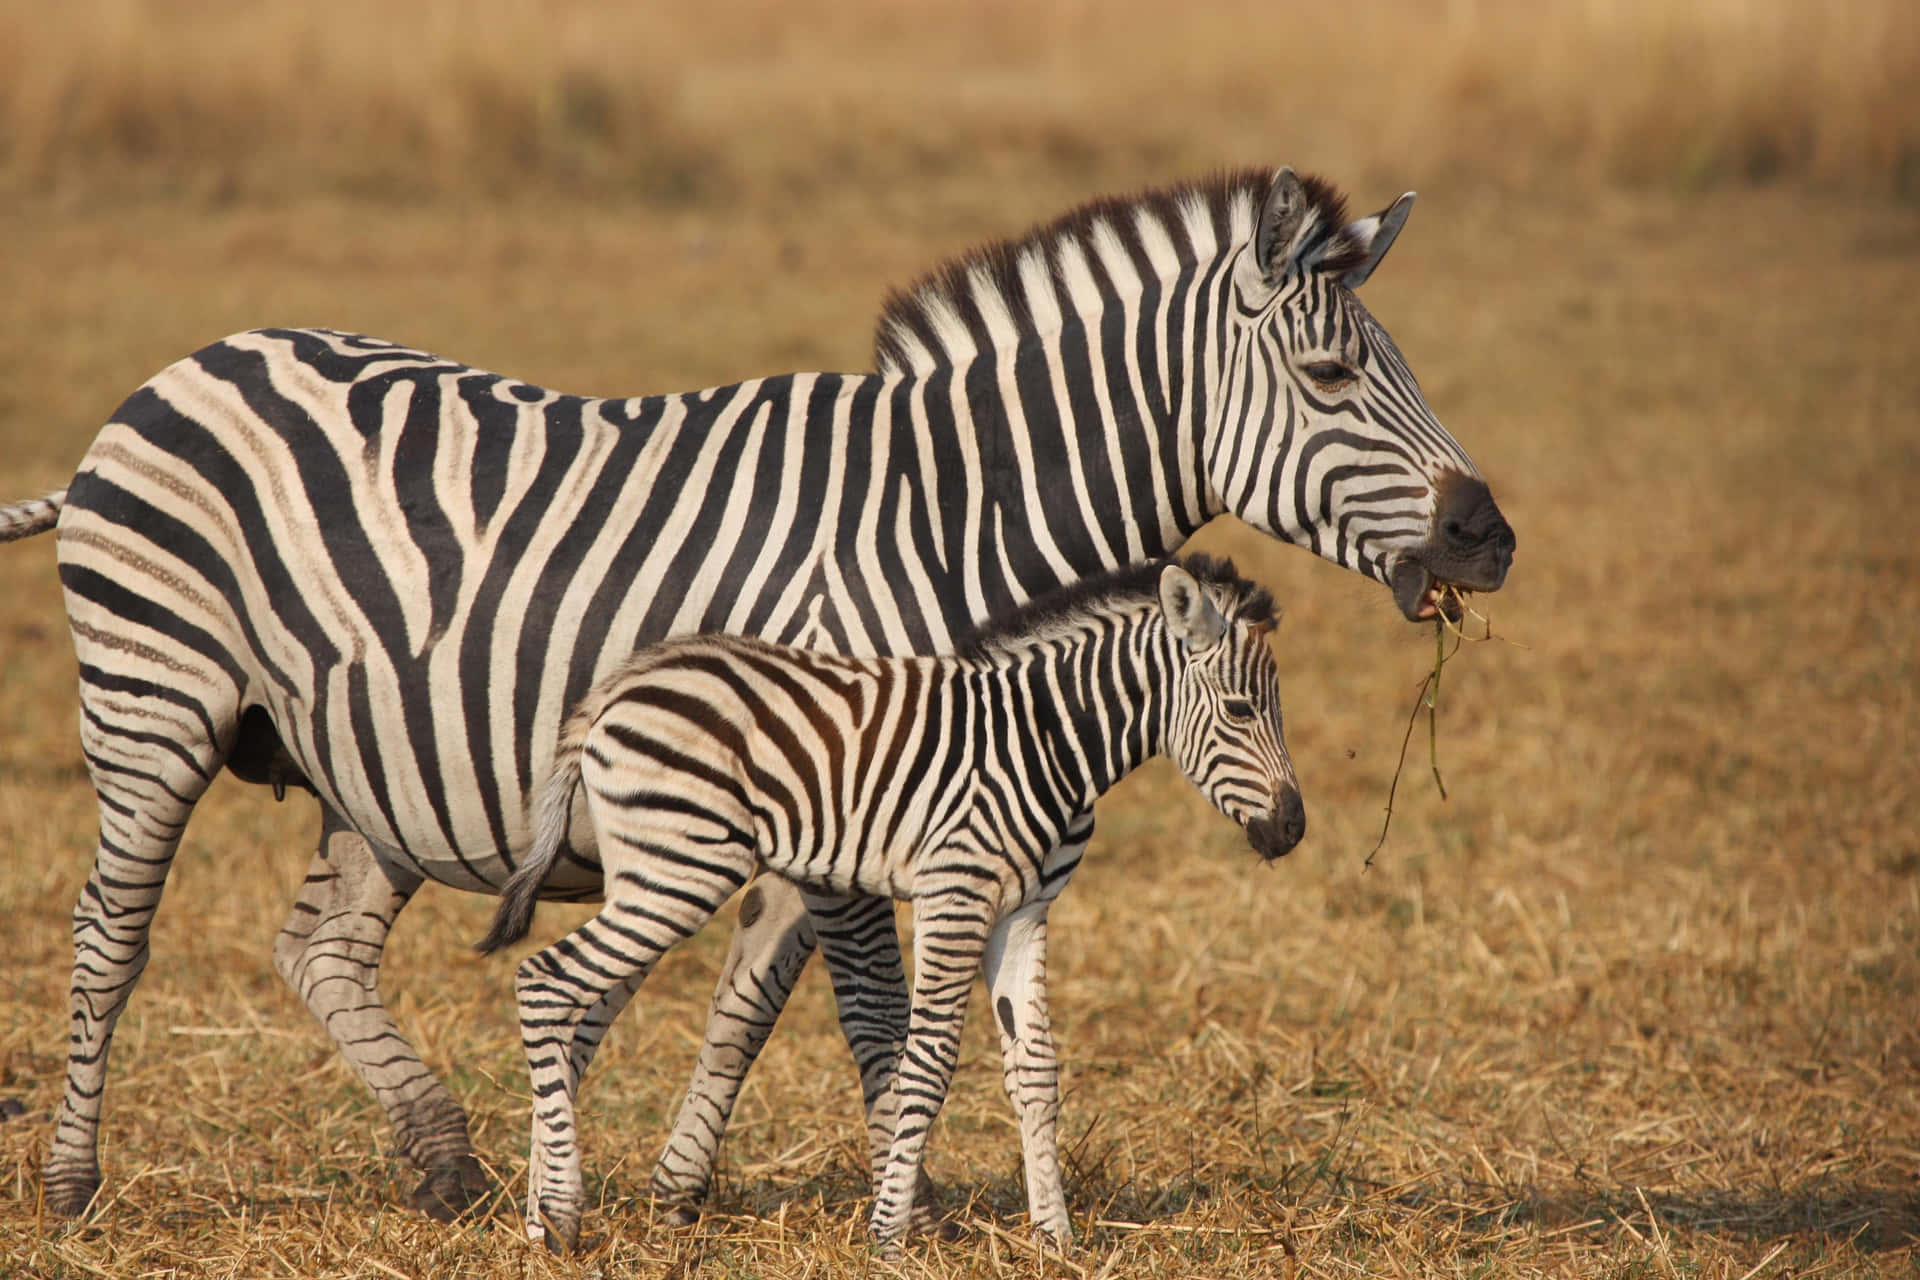 "The Striking Stripes of a Zebra"